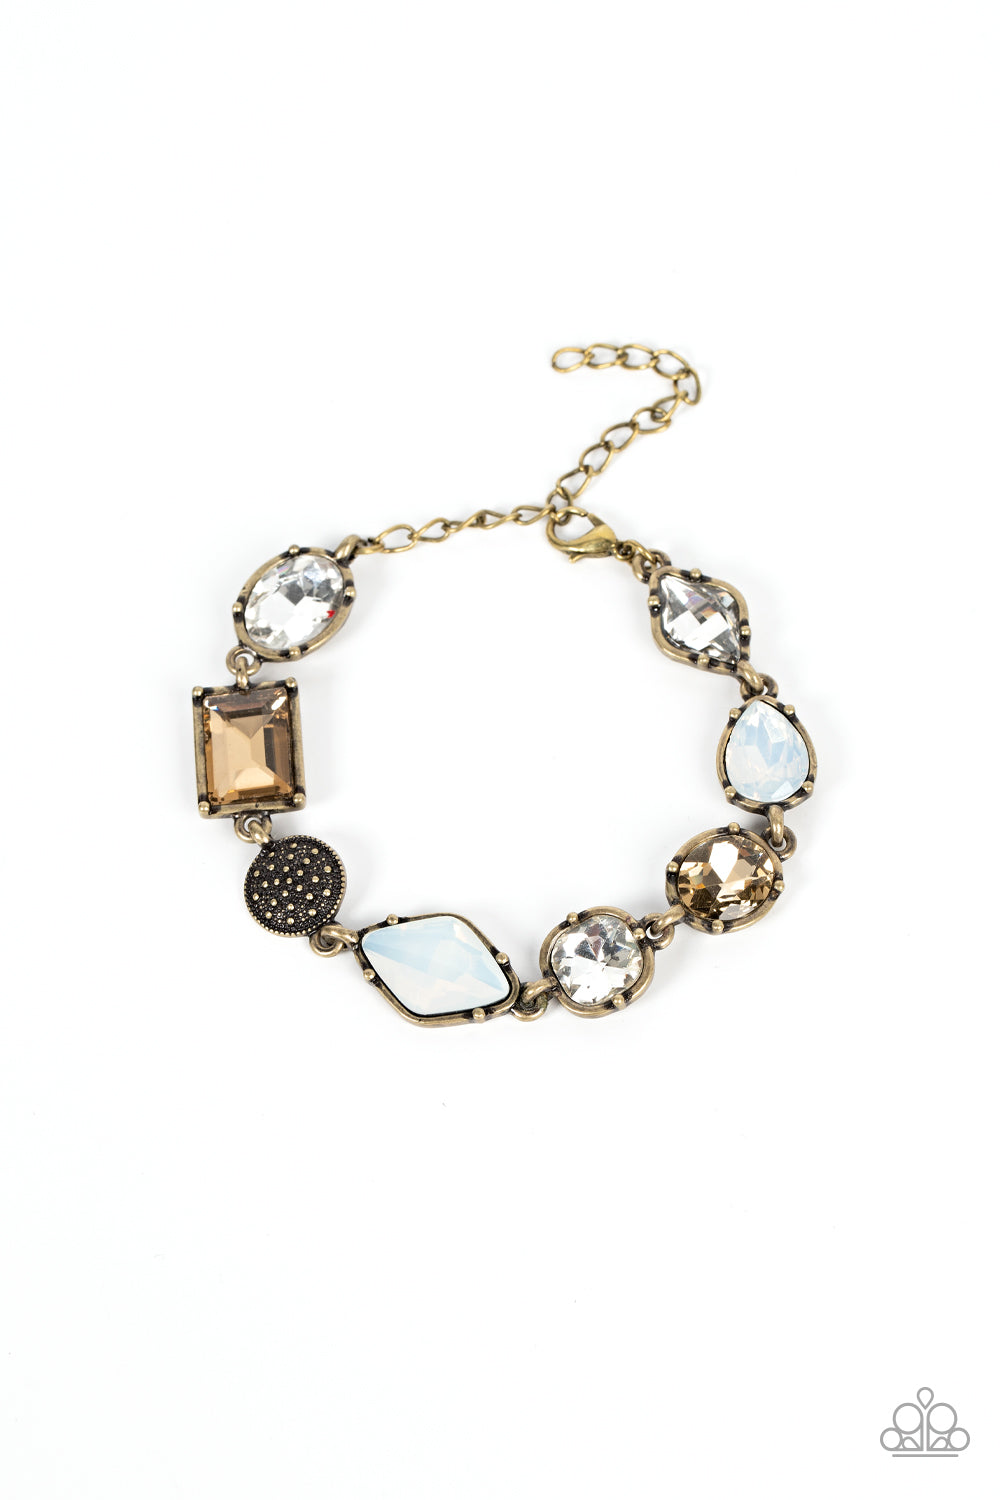 Jewelry Box Bauble Bracelet (Gold, Silver, Brass)